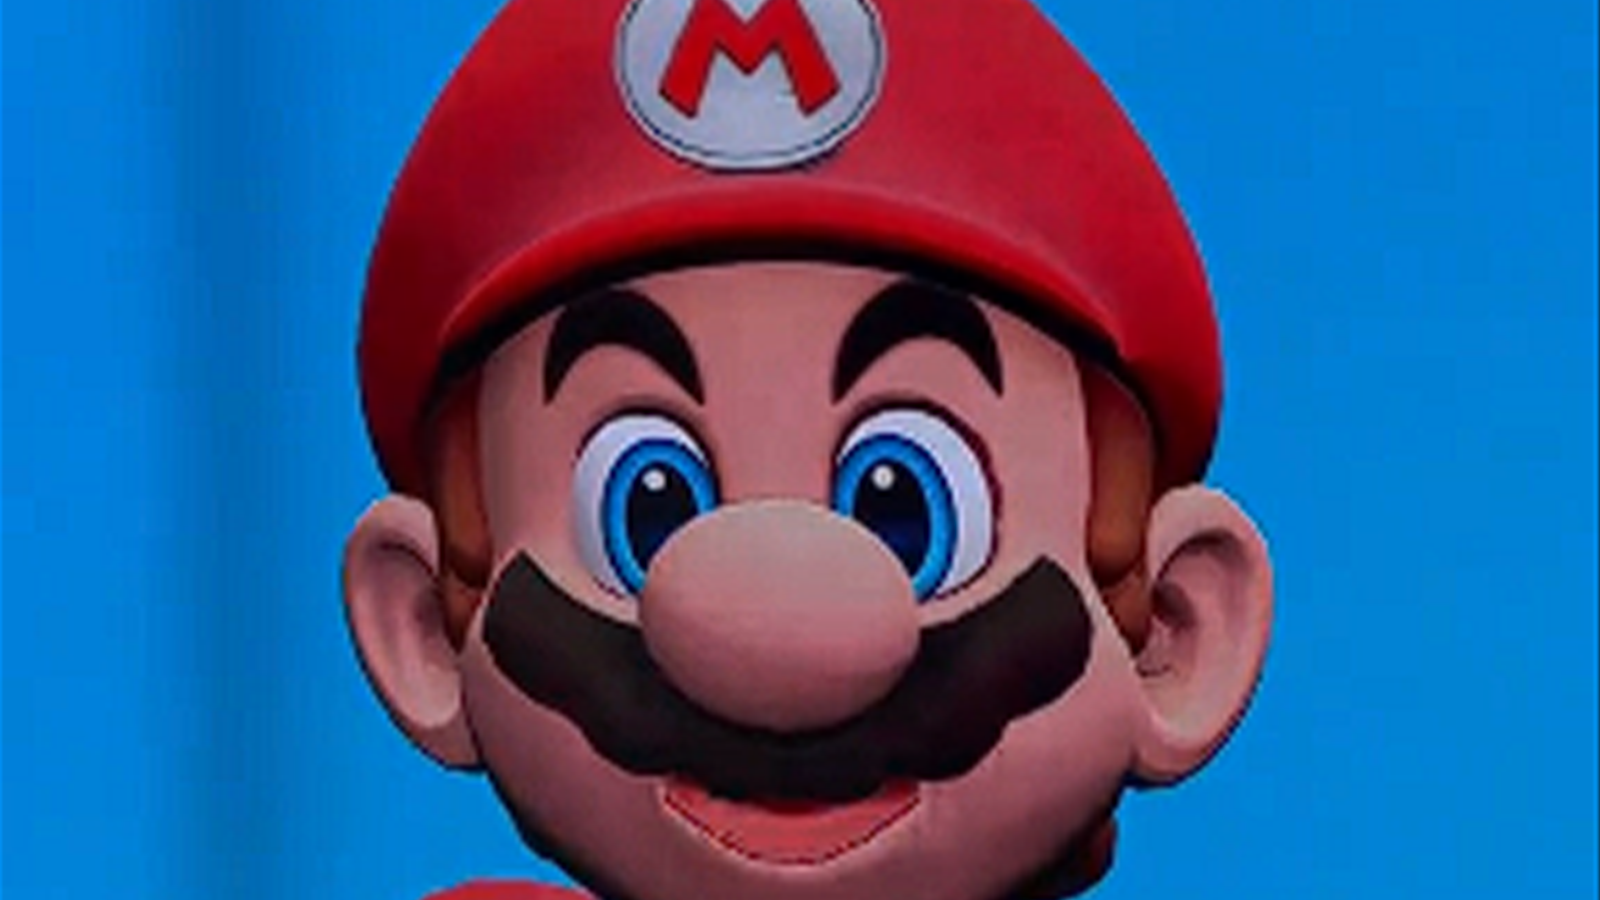 The creepy AARP Mario